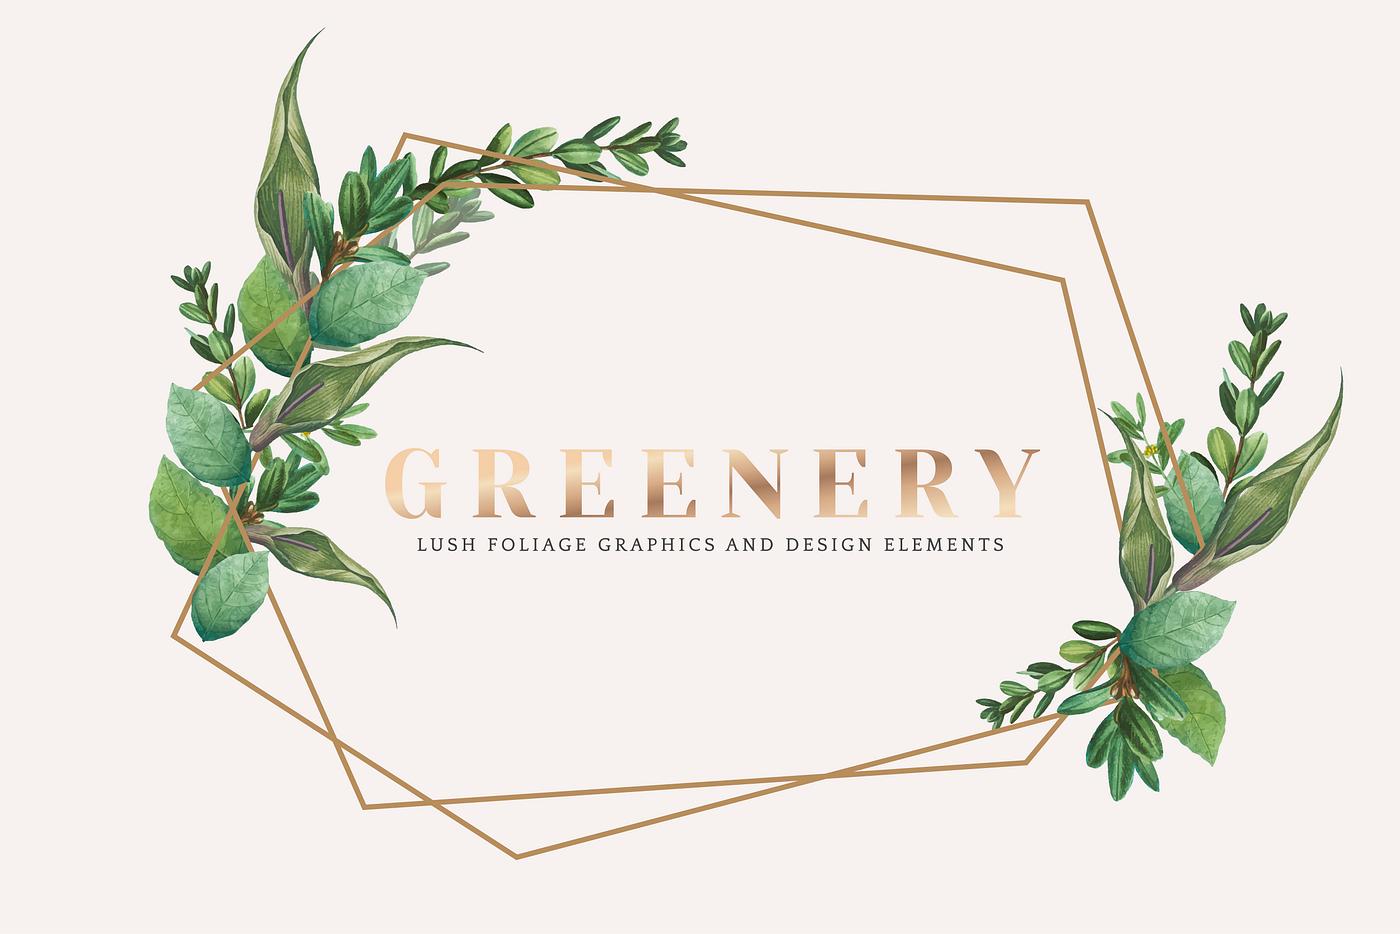 Greenery wallpaper | Royalty free stock vector - 584996